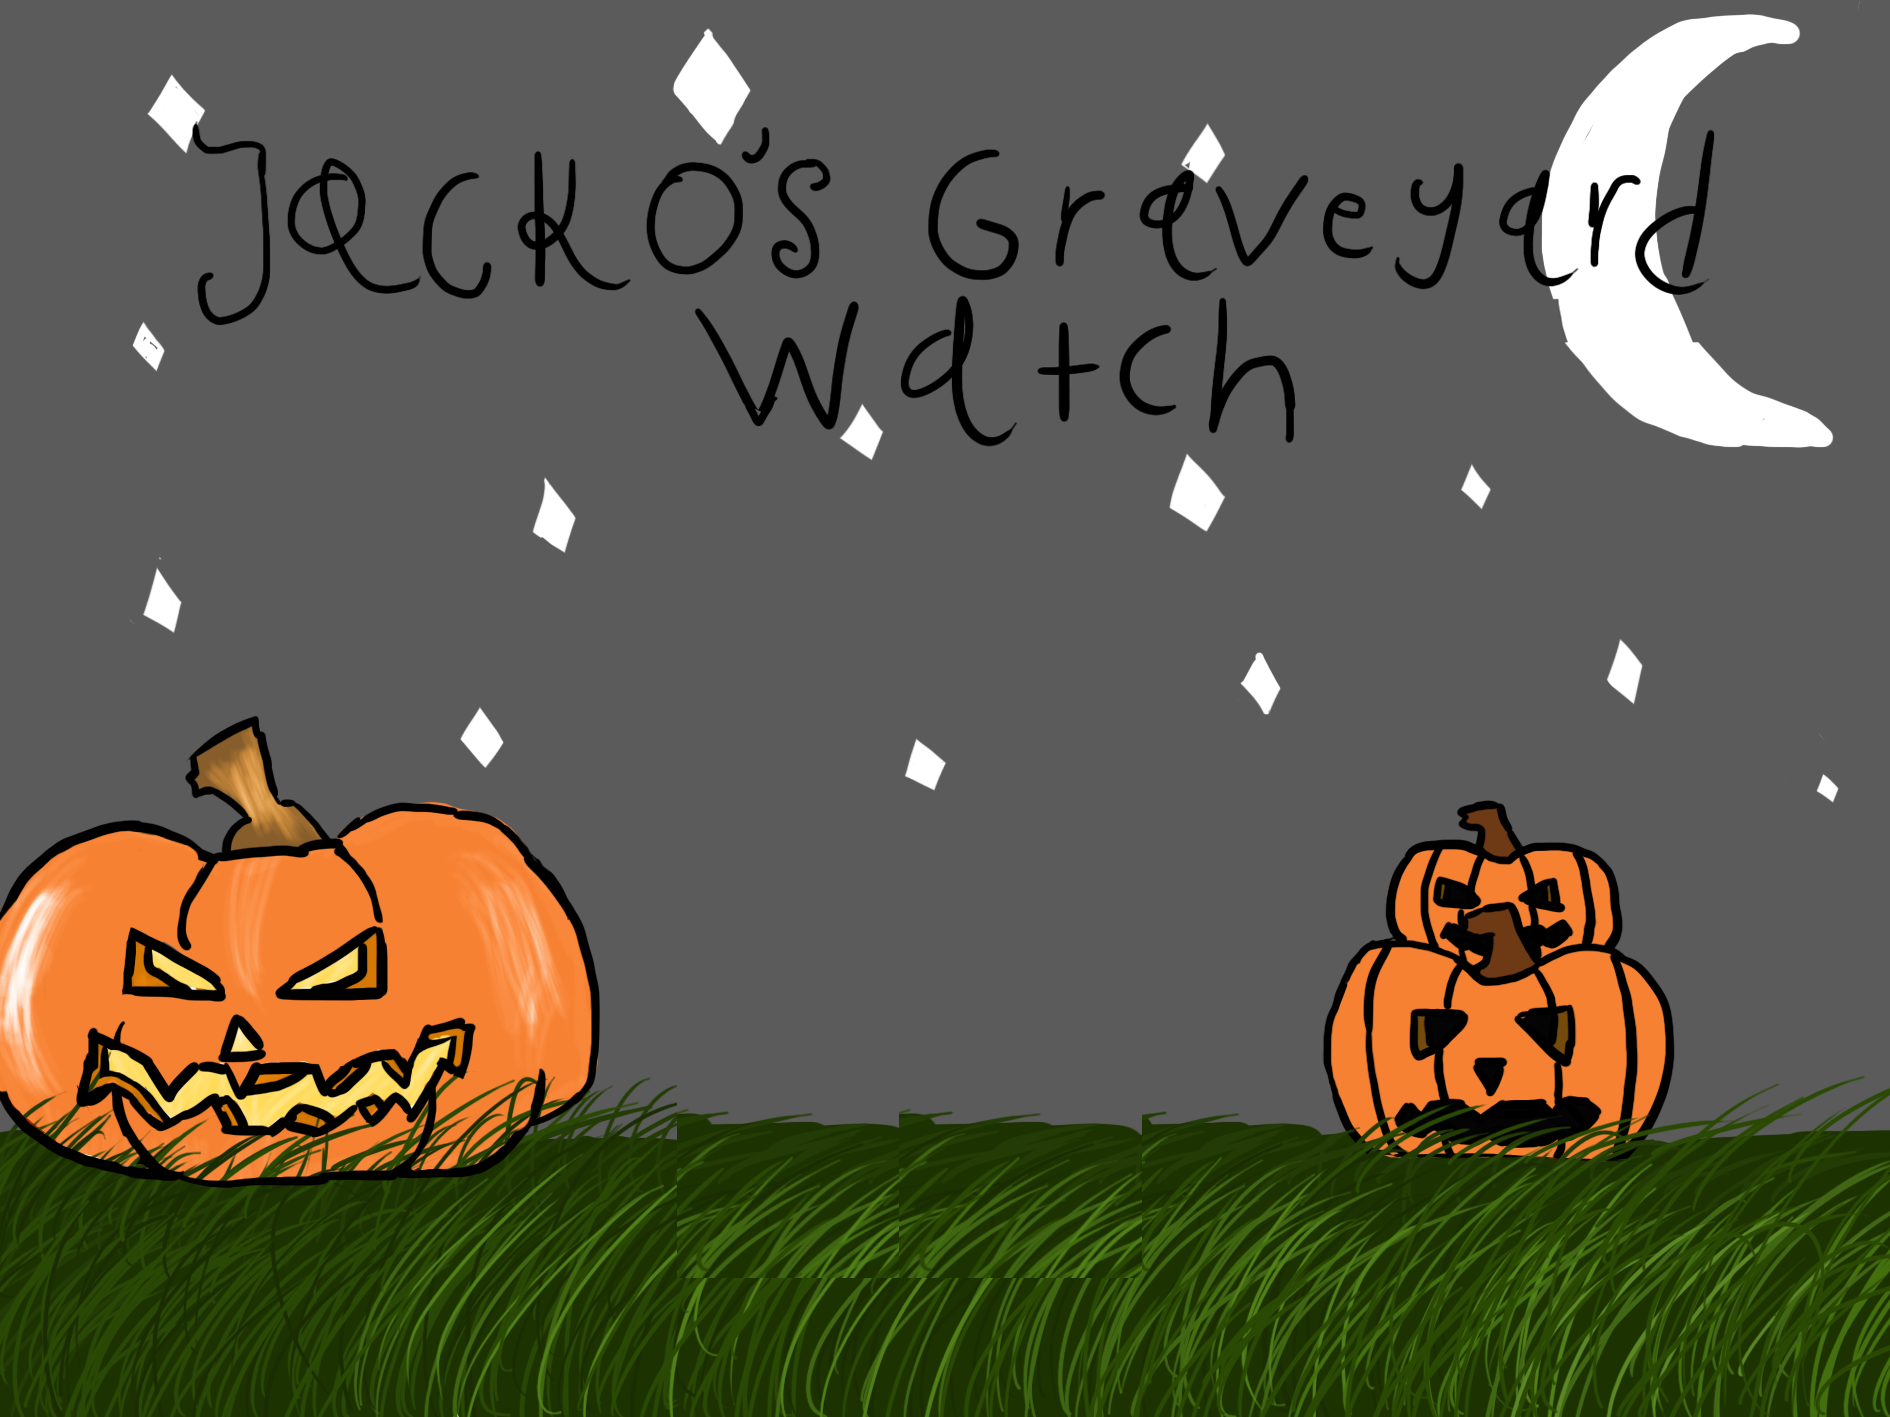 Jacko's Graveyard watch